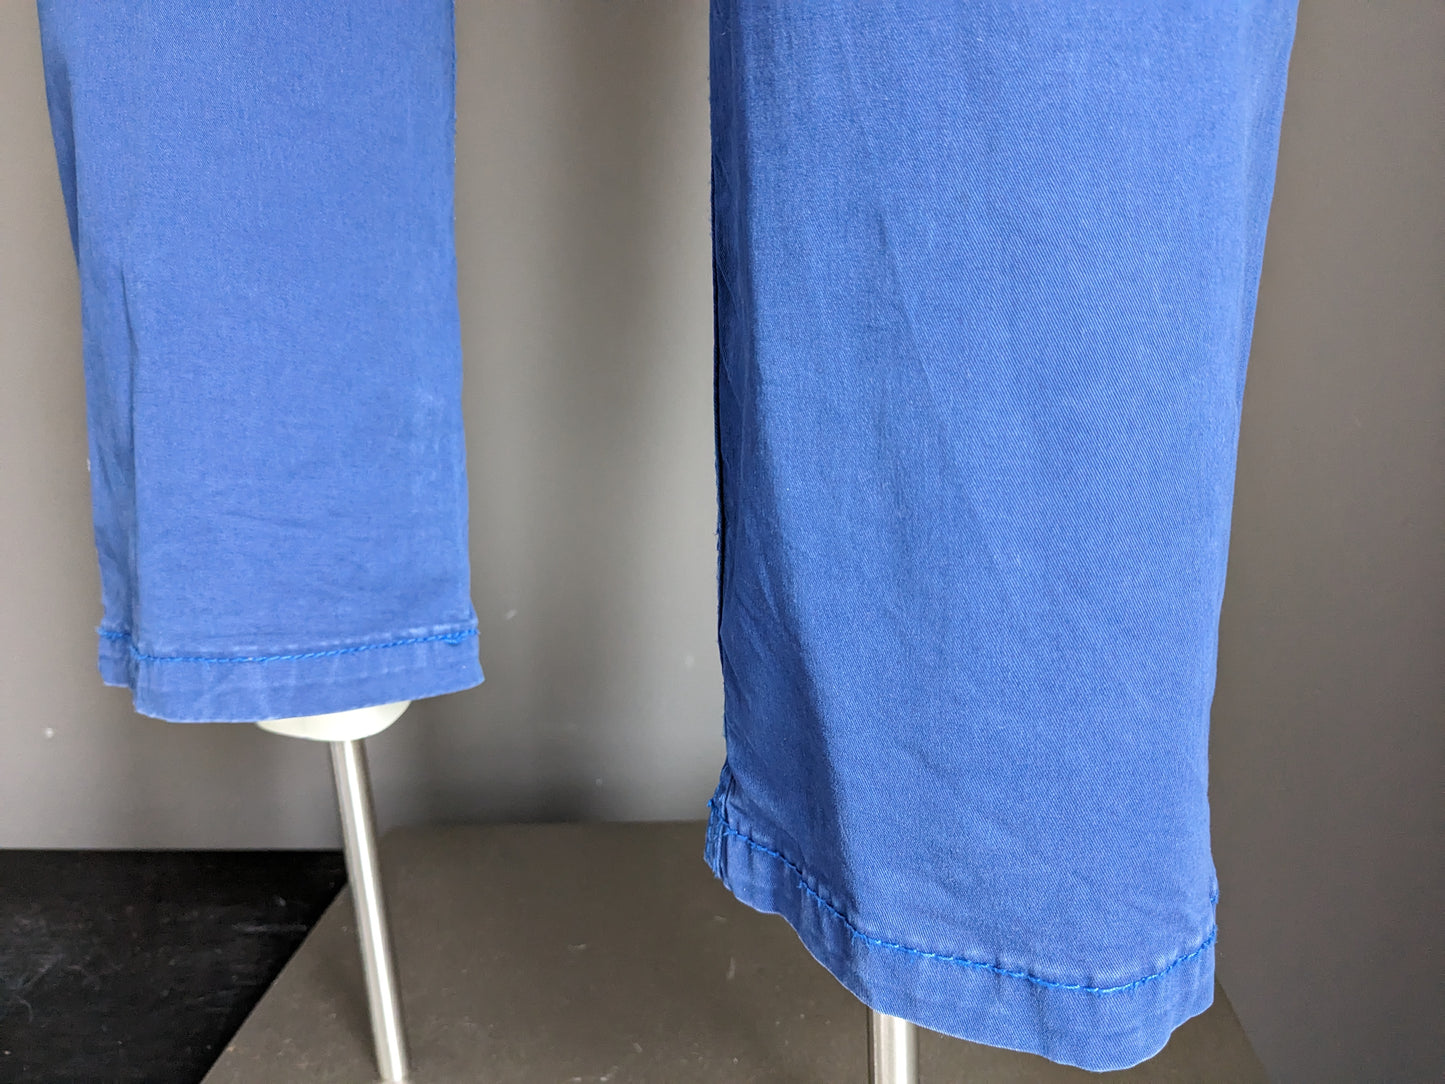 Bartlett broek / pantalon. Blauw. Maat 24 (48) / M